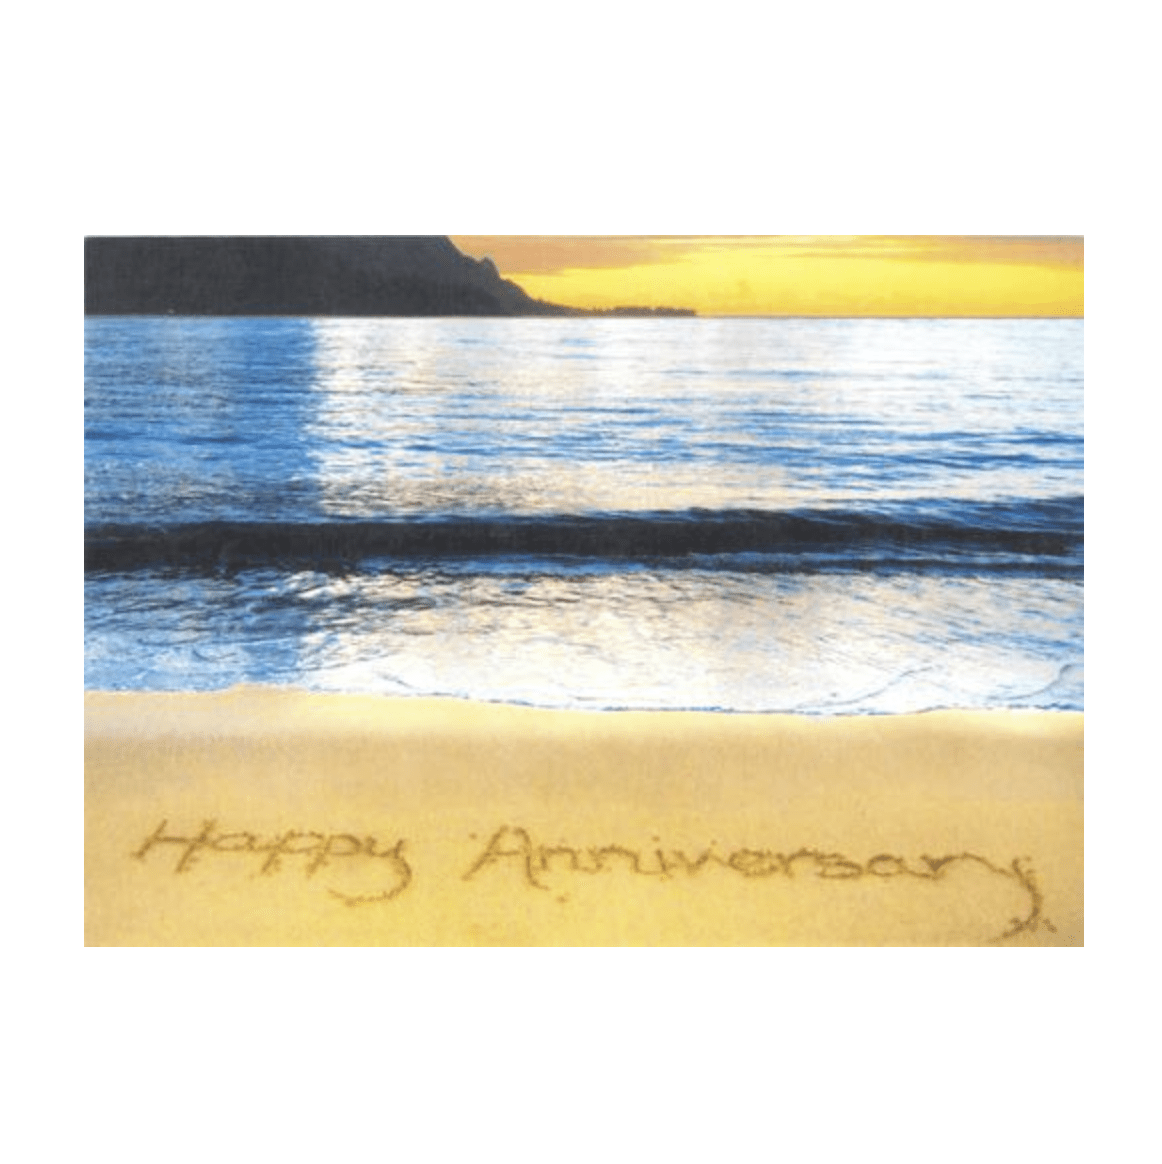 Happy Anniversary (Hanalei Bay) Greeting Card